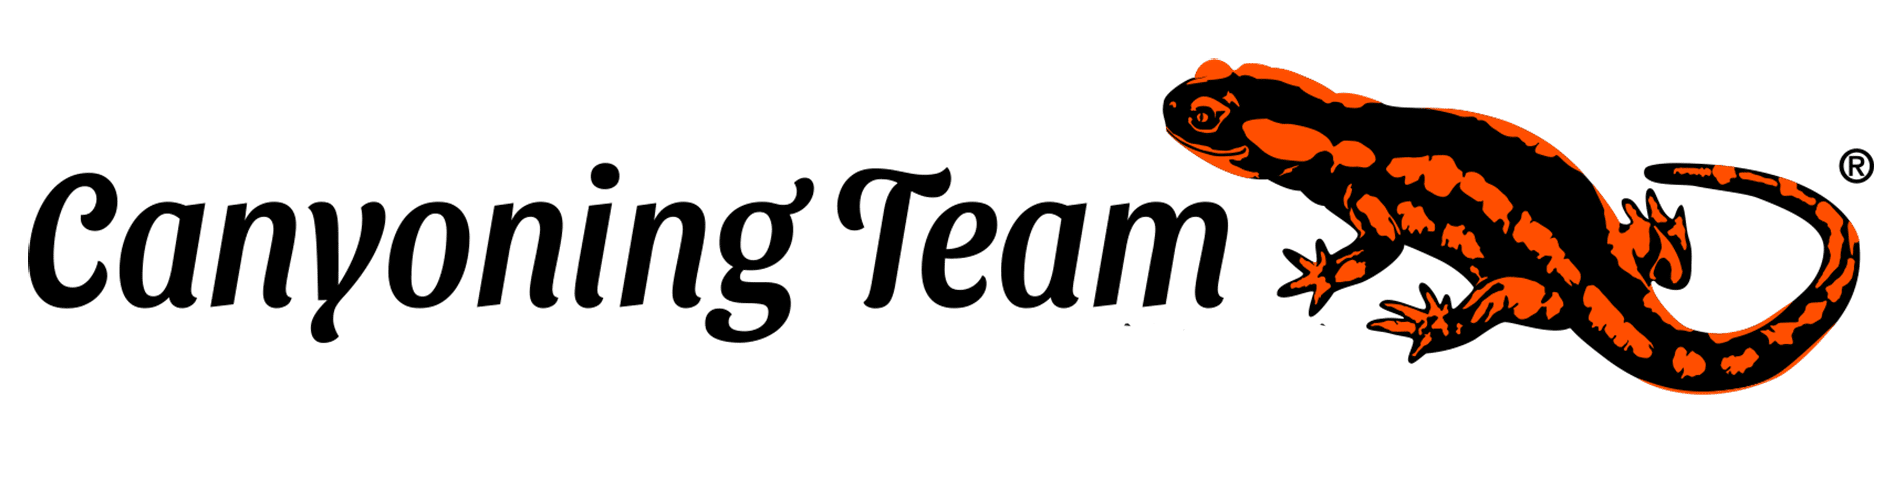 Canyoning Team Logo